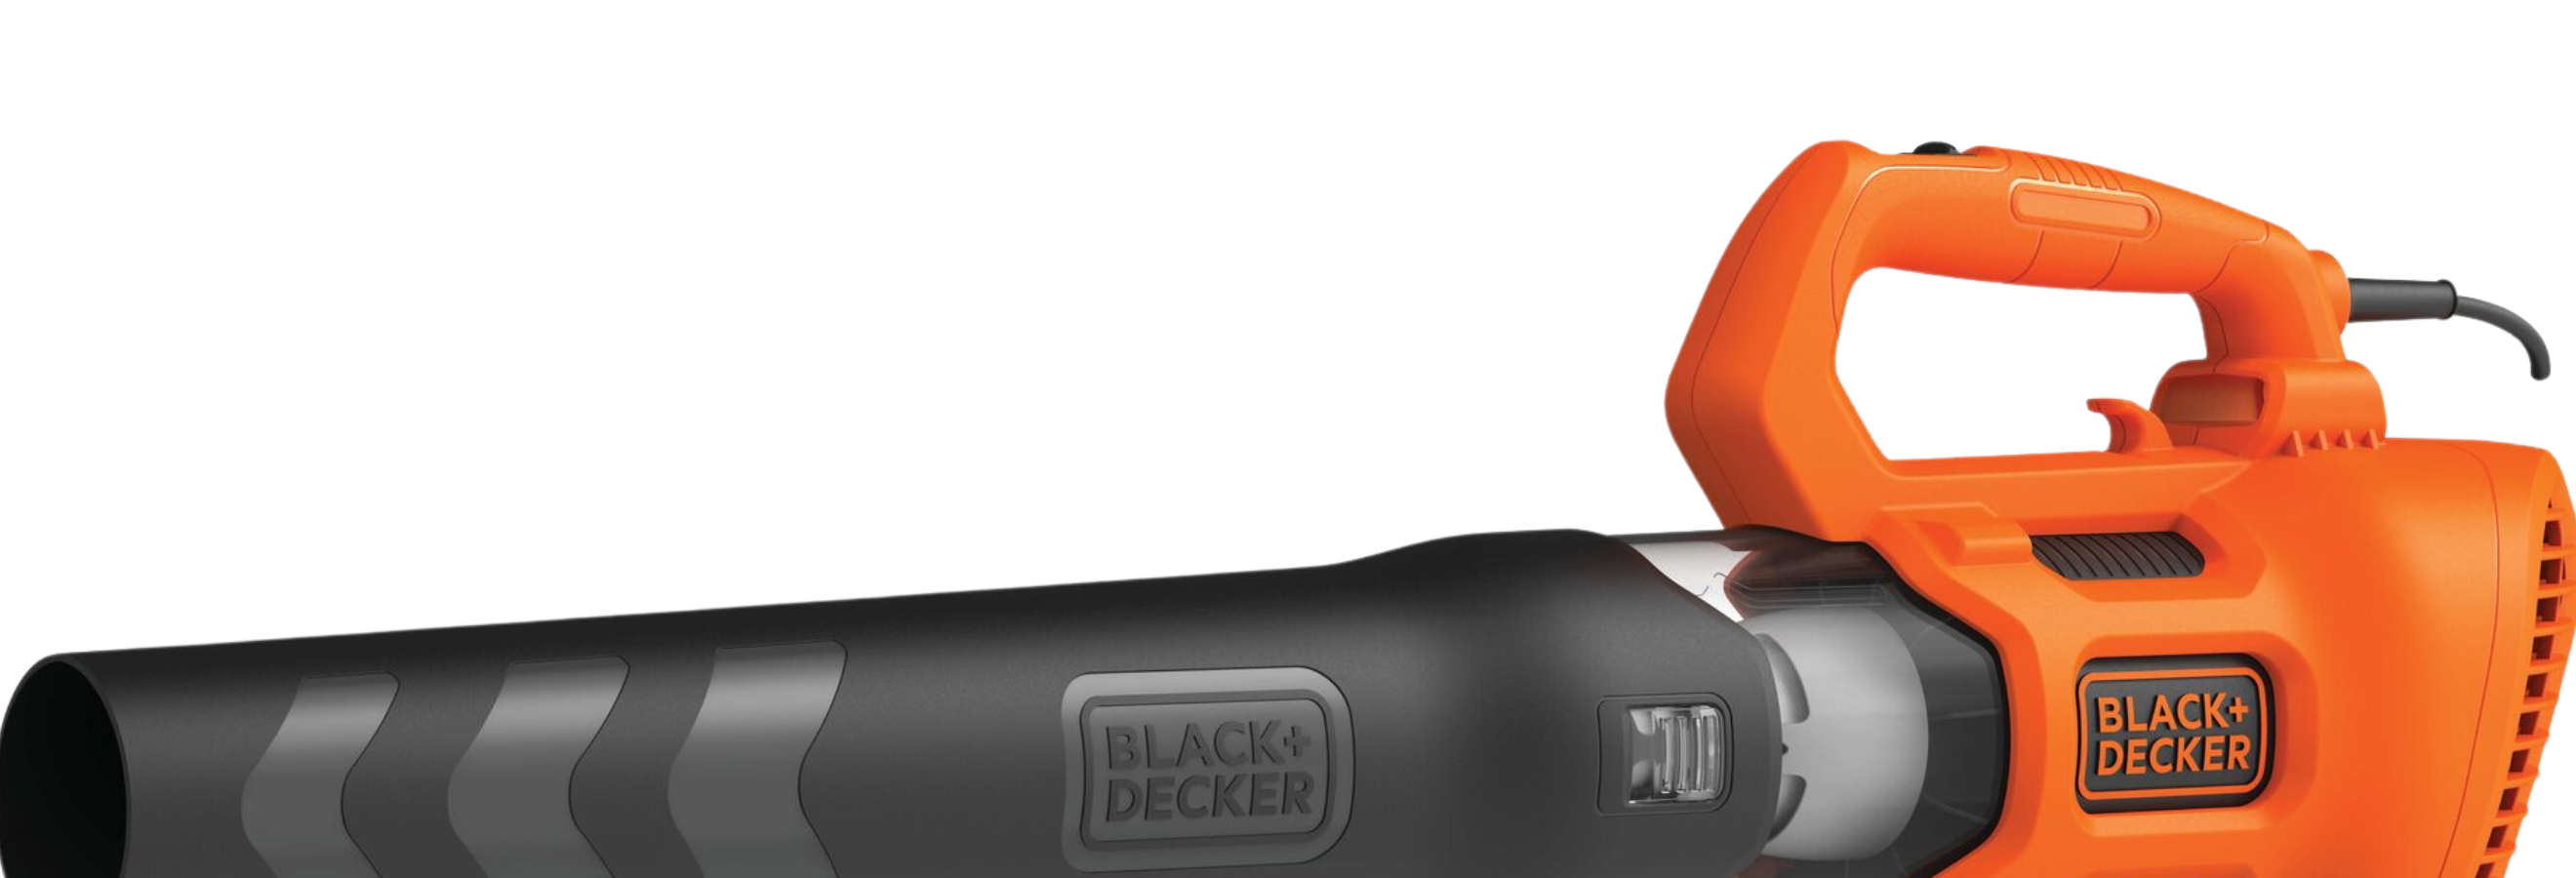 BLACK+DECKER BEBL750 CORDED 9AMP UP TO 450CFM 2 SPEEDS BLOWER NEW